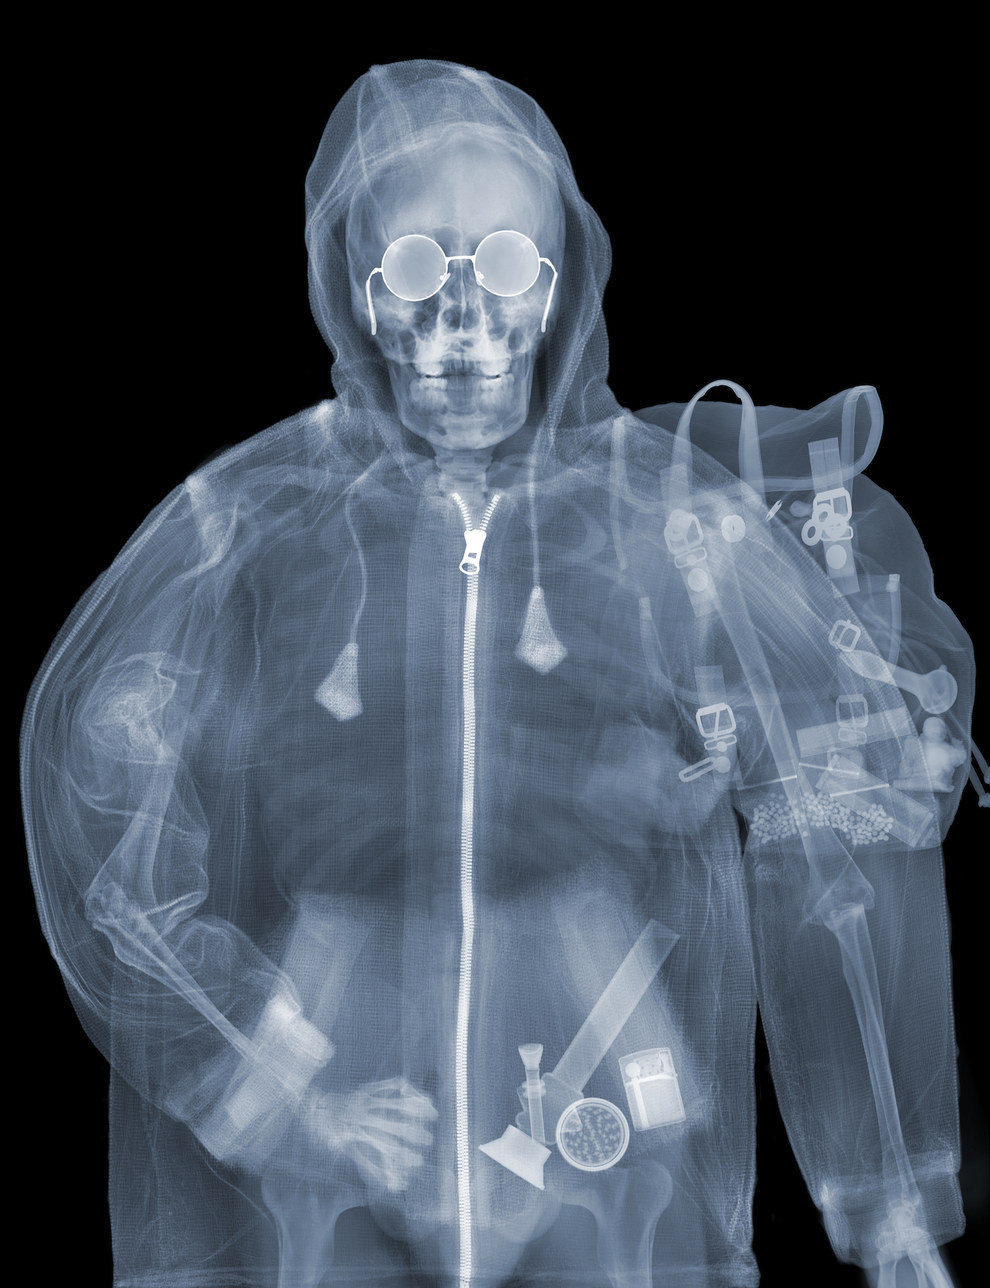 x ray radiation exposure